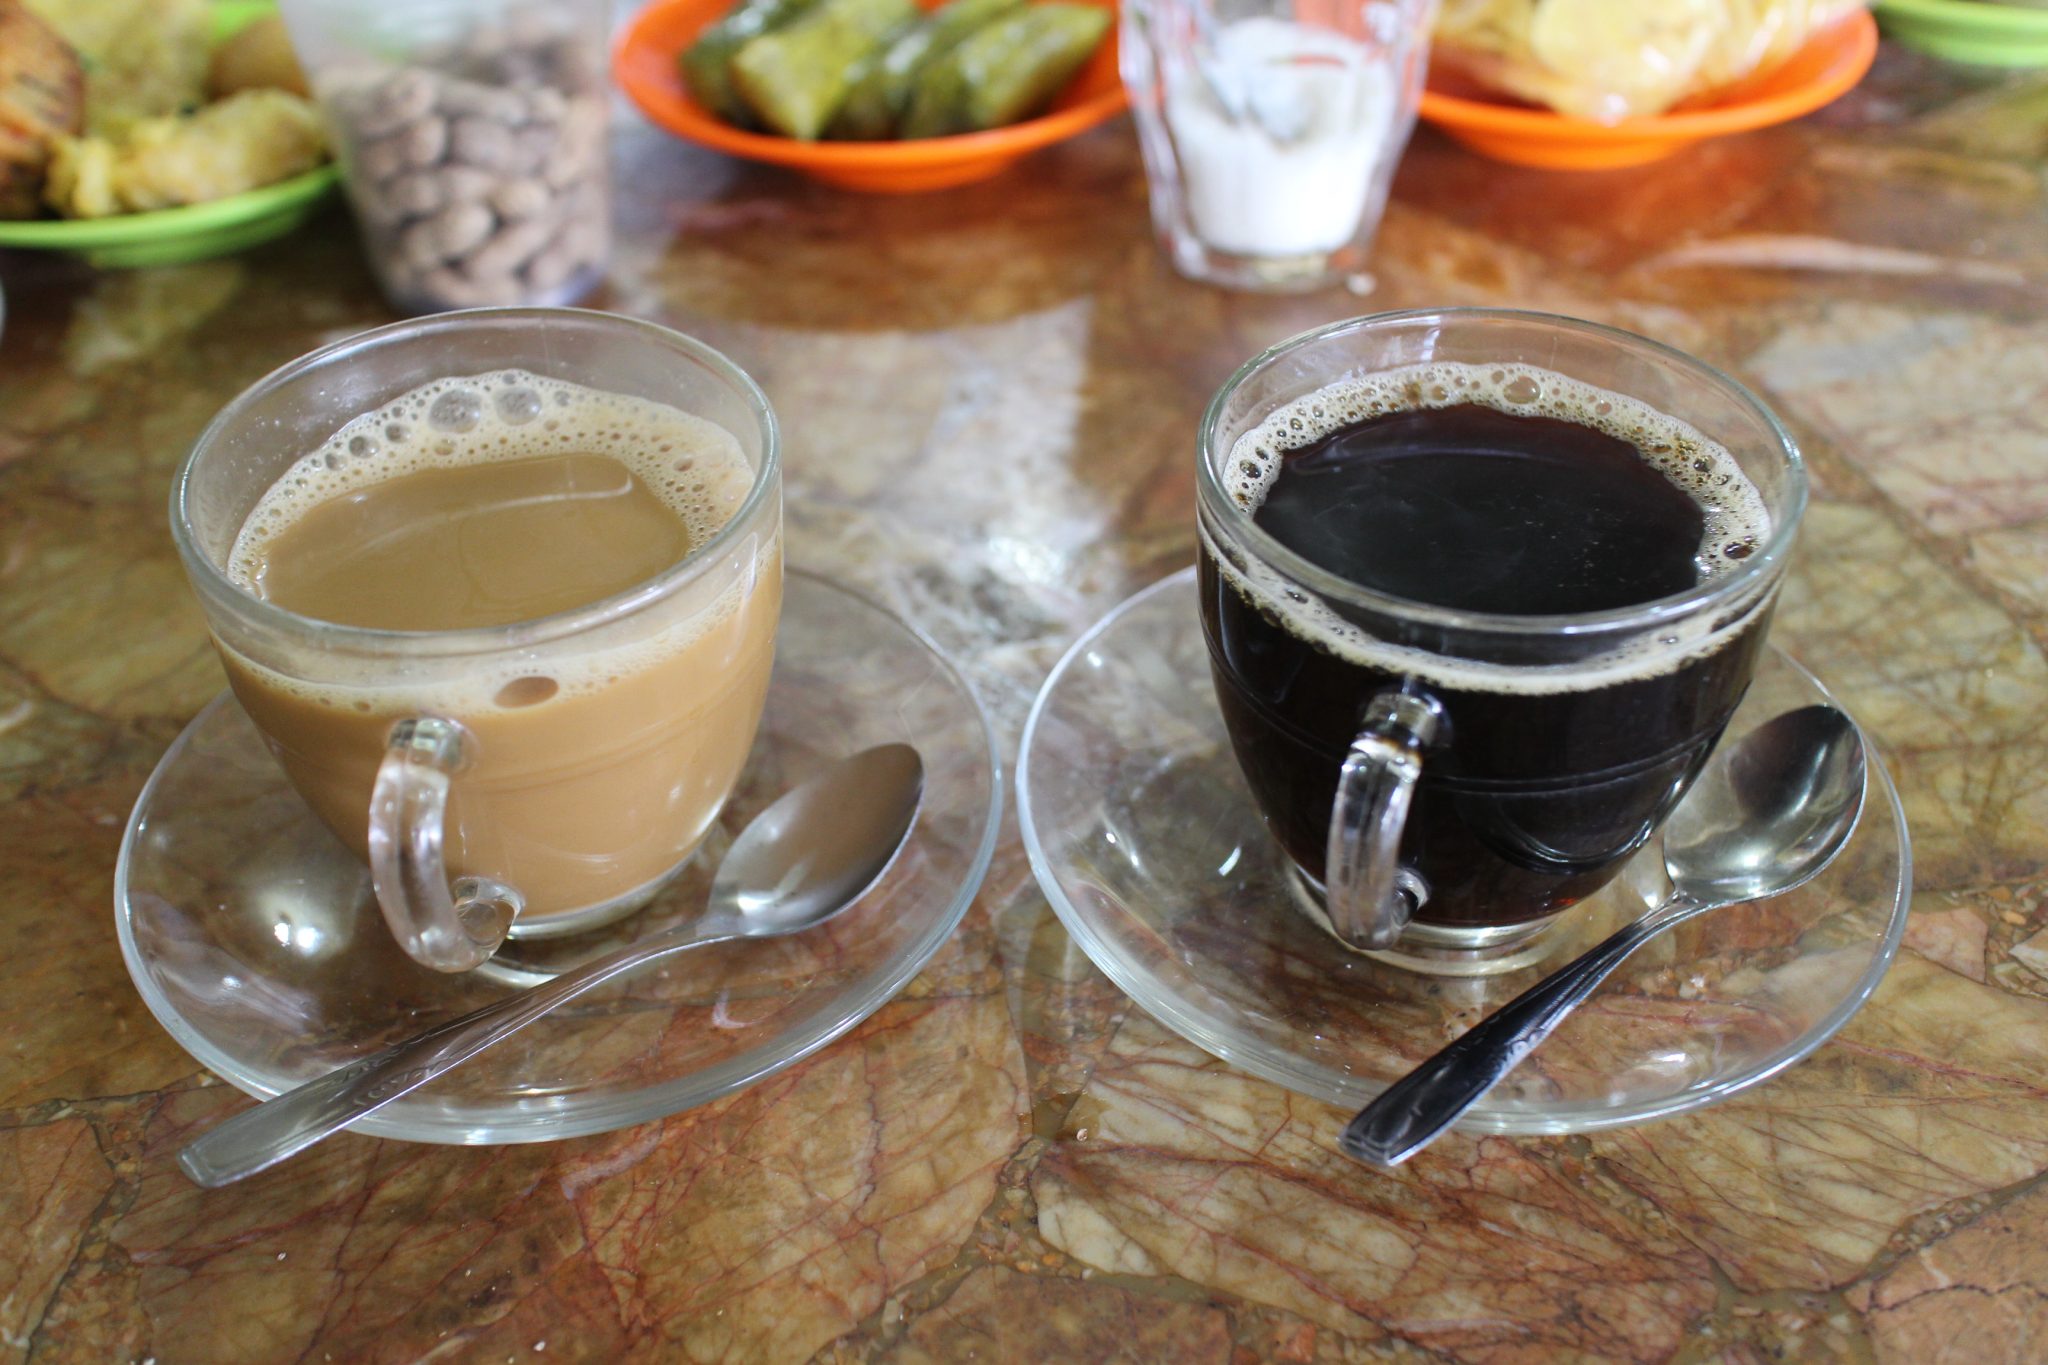 Warung Kopi Yuk Sri - Coffee Shop Recommend!